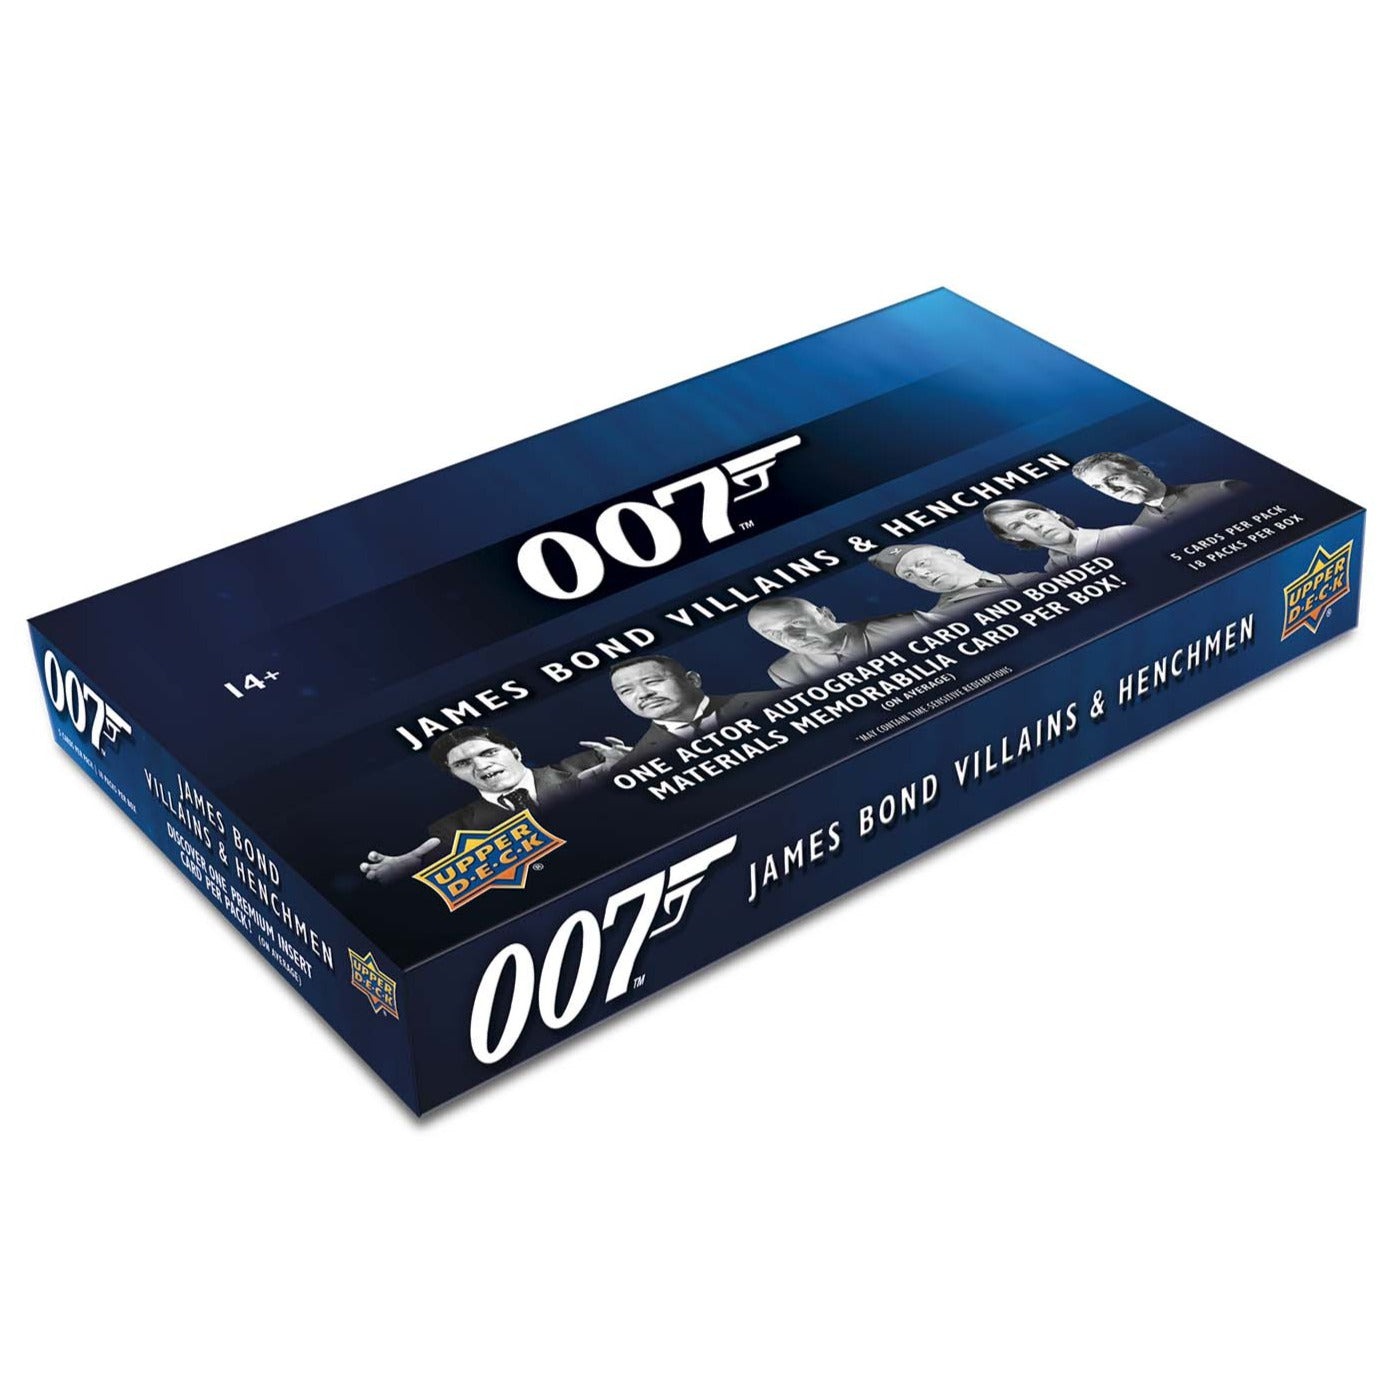 James Bond Villains & Henchmen Trading Cards - By Upper Deck GAMES UPPER DECK 